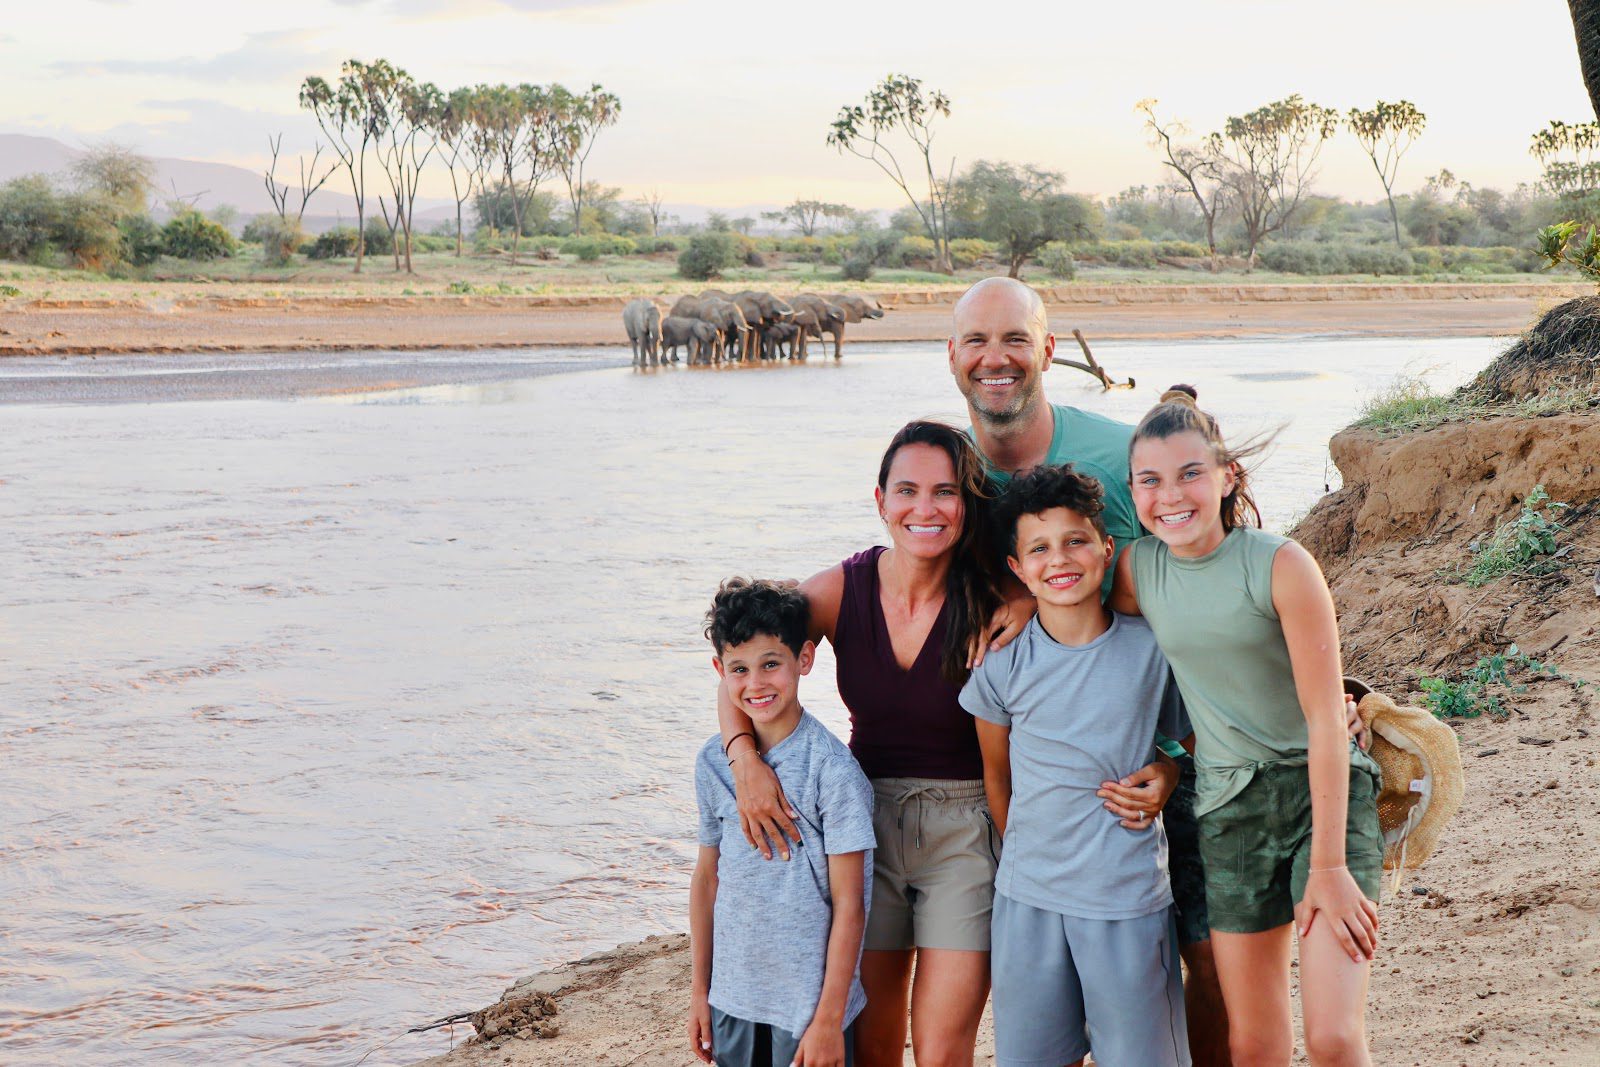 This Family's Amazing Safari Will Make You Want to Plan Your Own, Elephant Safari